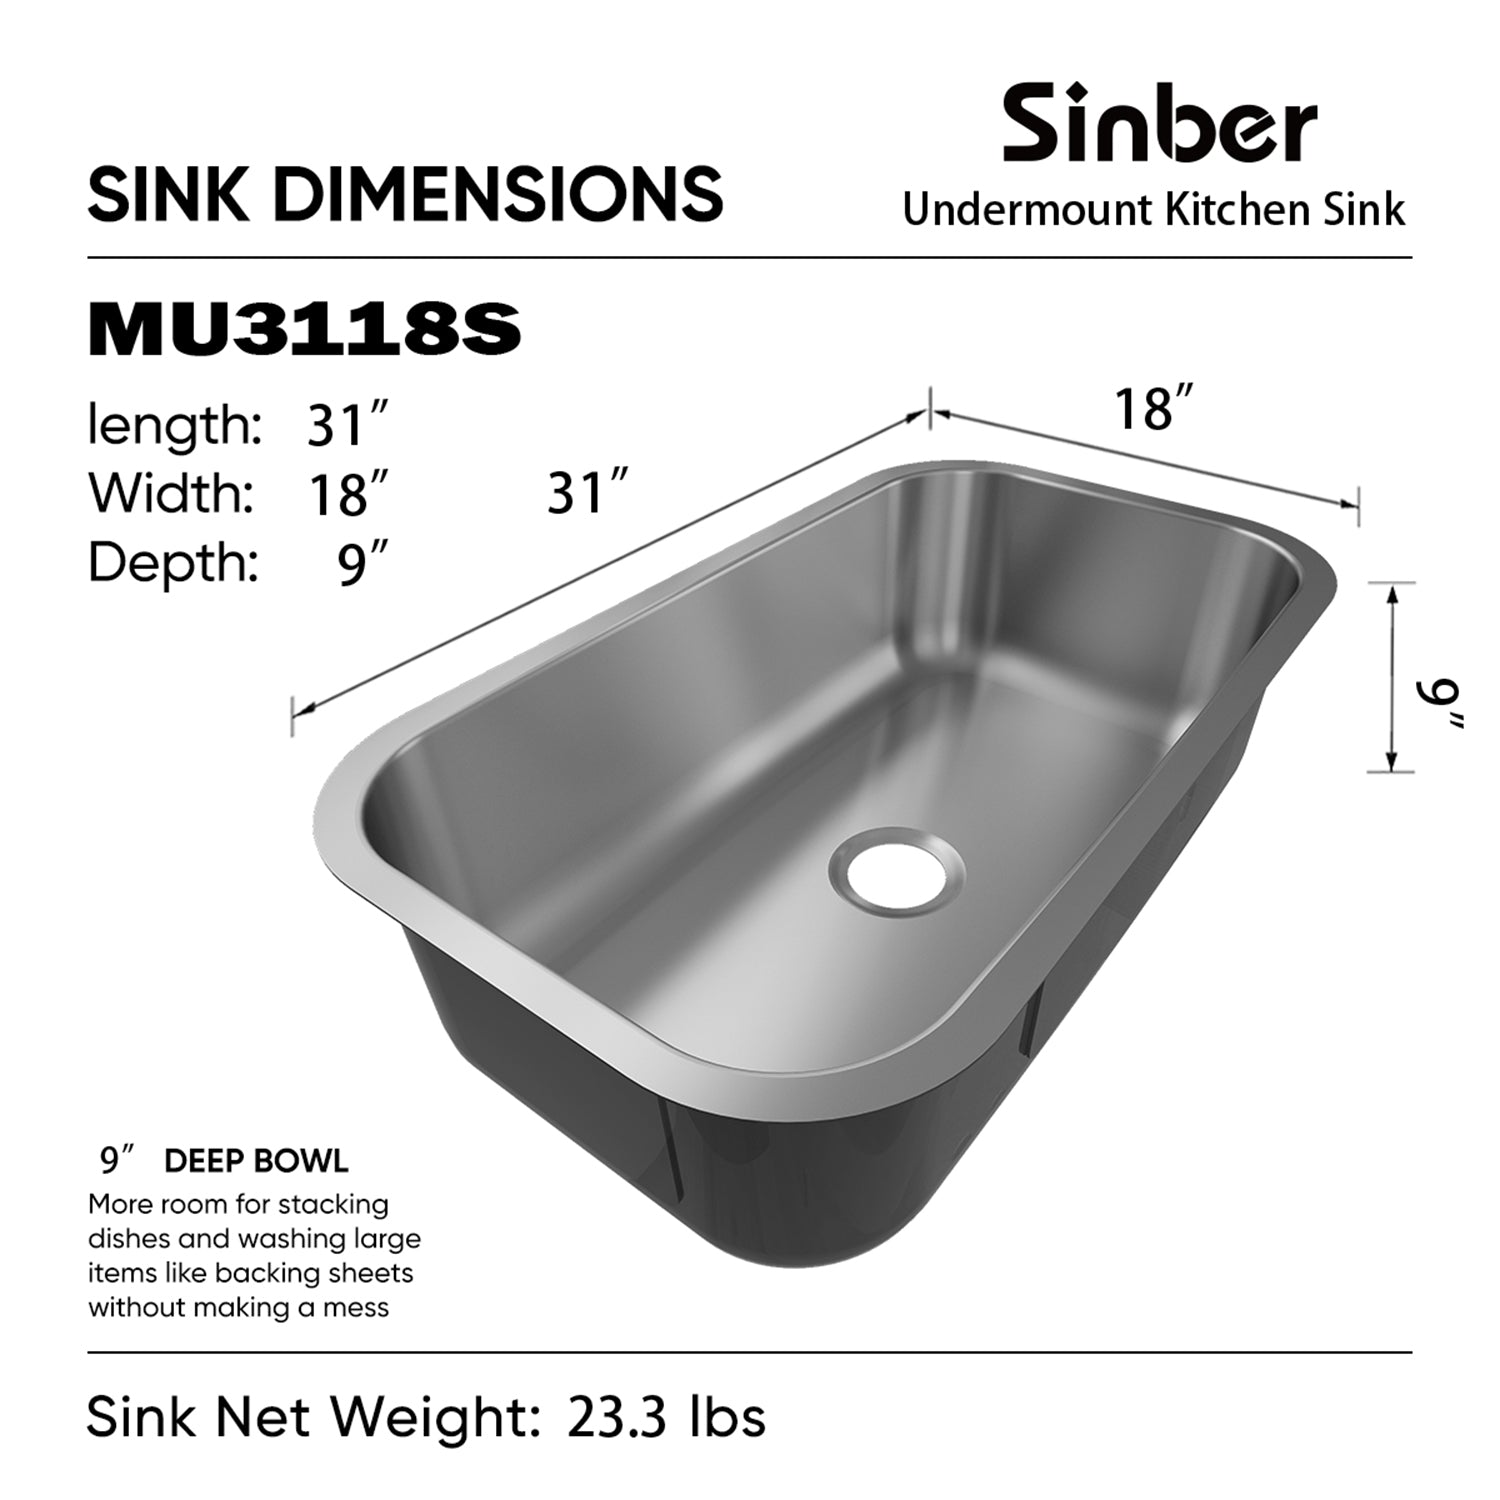 Sinber 31" x 18" x 9" Undermount Single Bowl Kitchen Sink with 18 Gauge 304 Stainless Steel Satin Finish MU3118S (Sink Only)